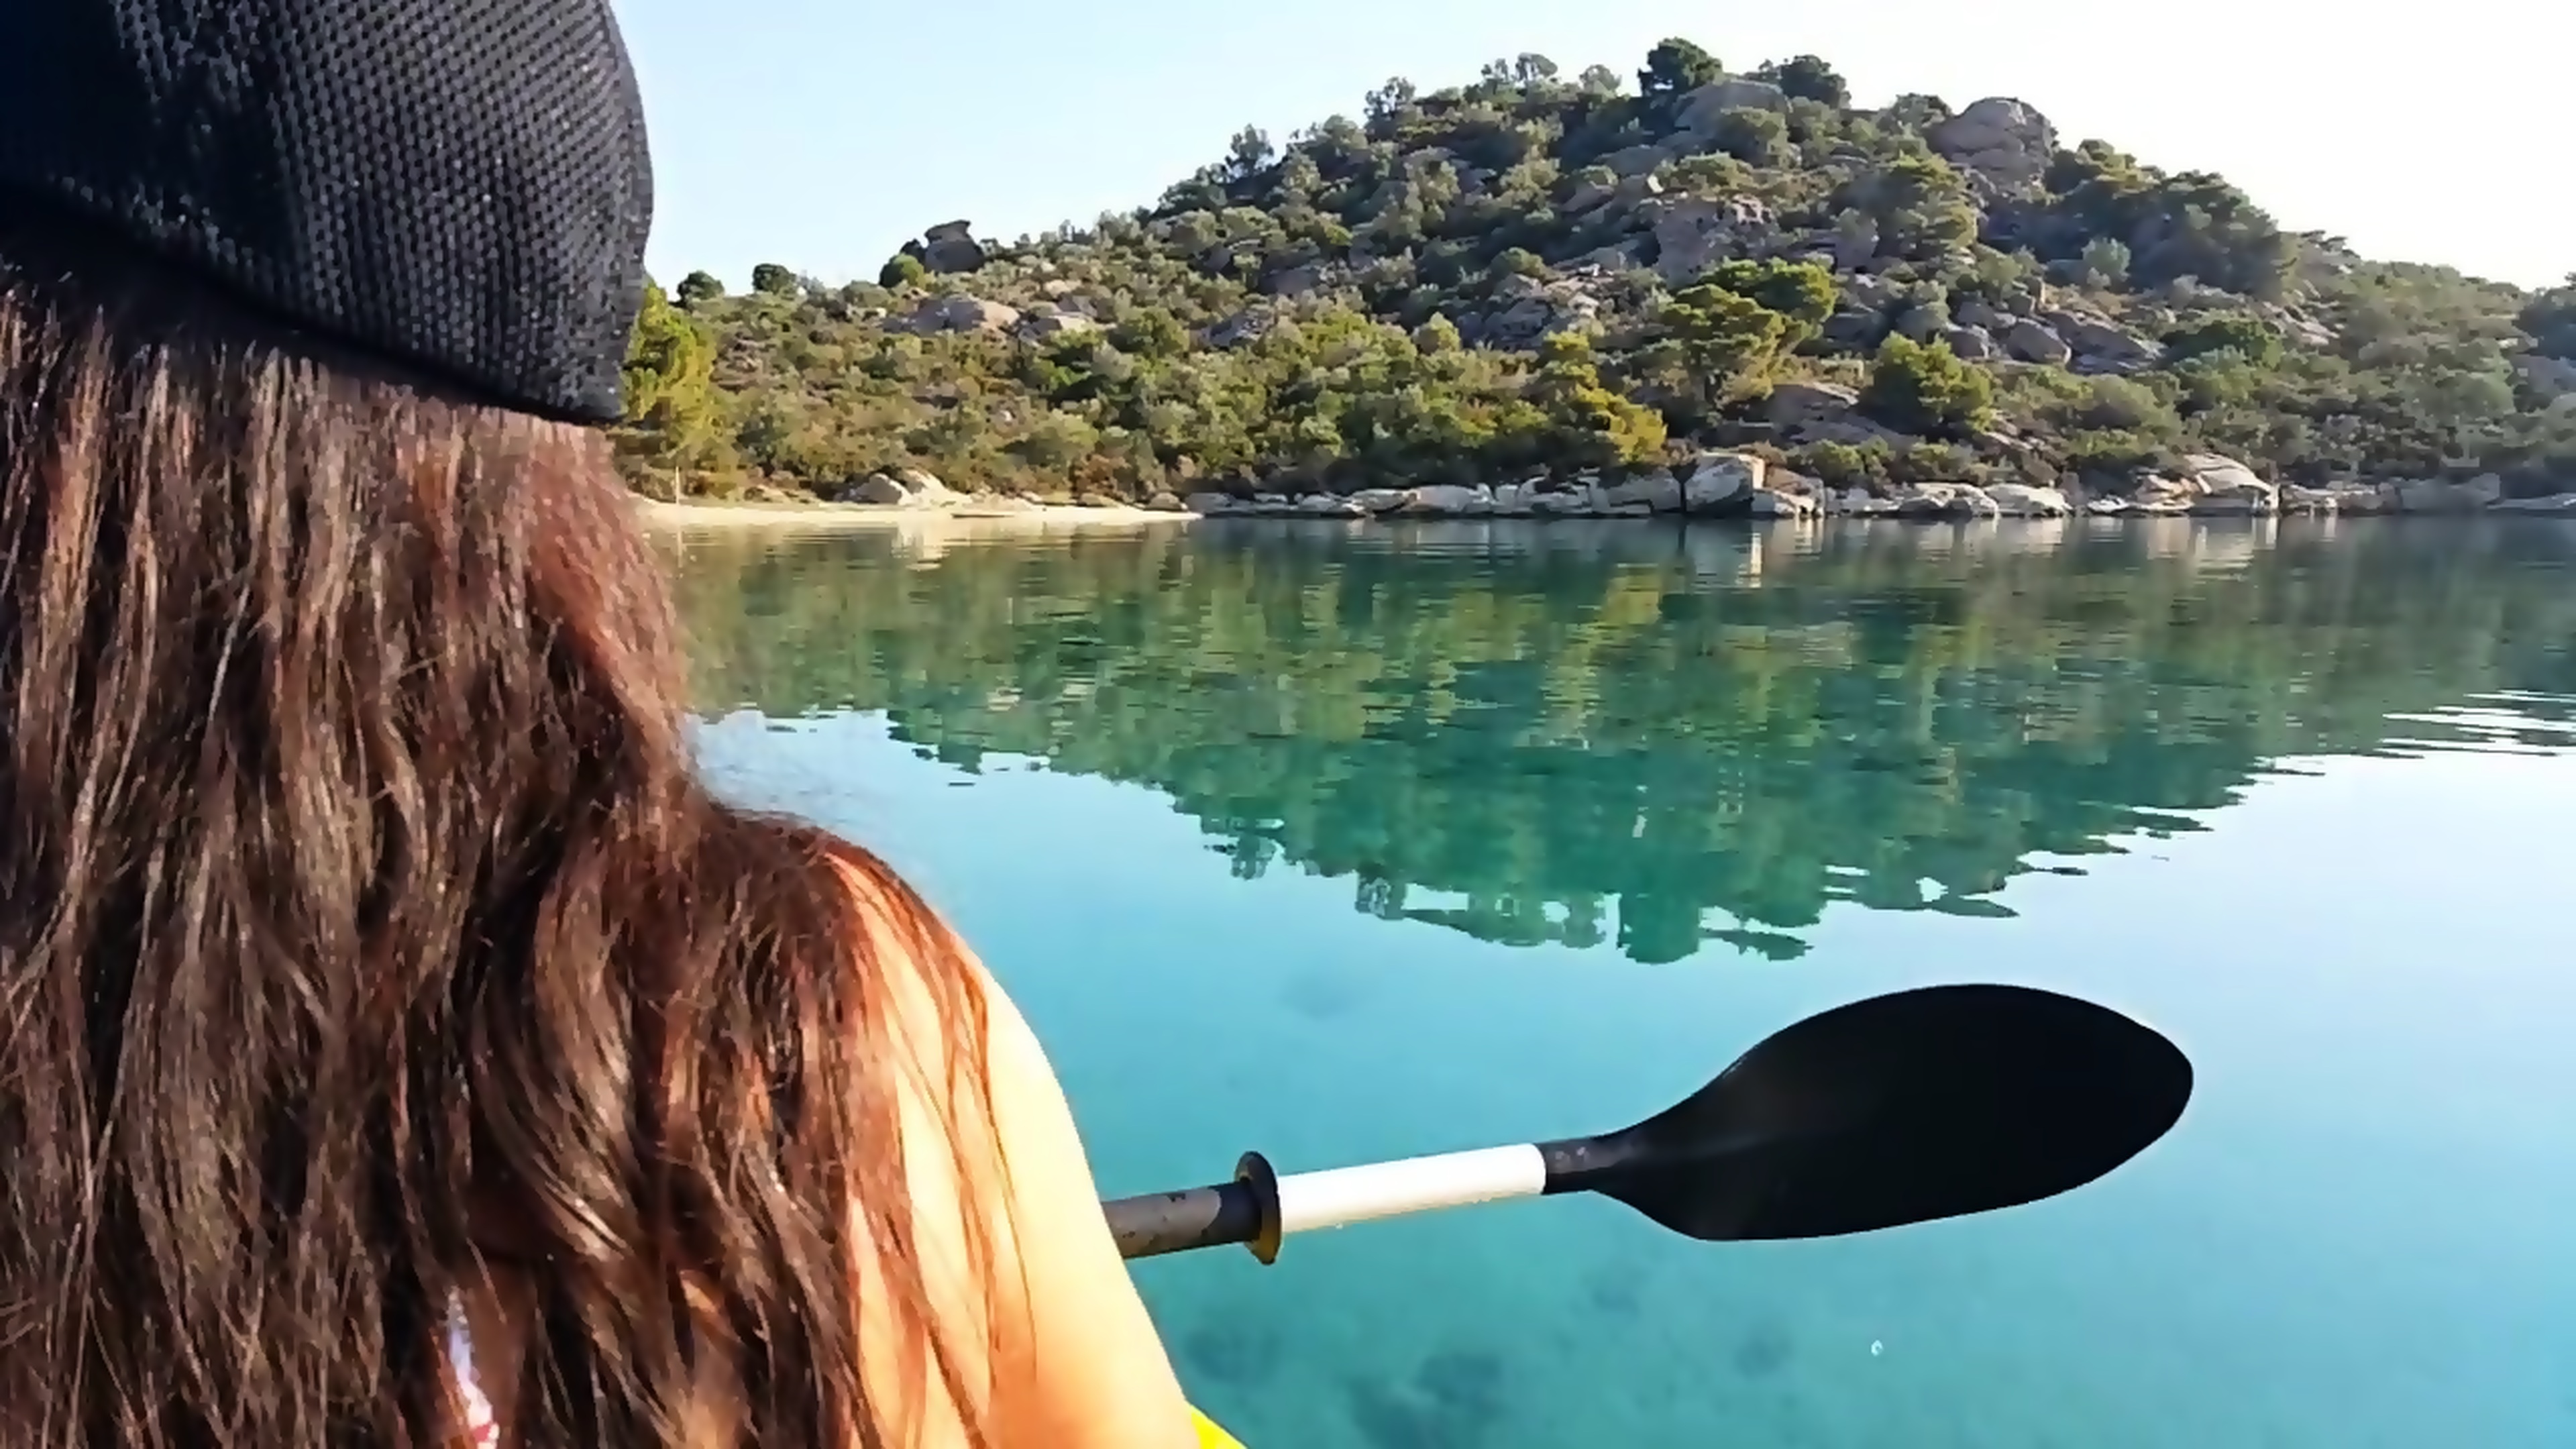 Island Fuck Adventure And Underwater Sperm Liking From Vagina Eporner